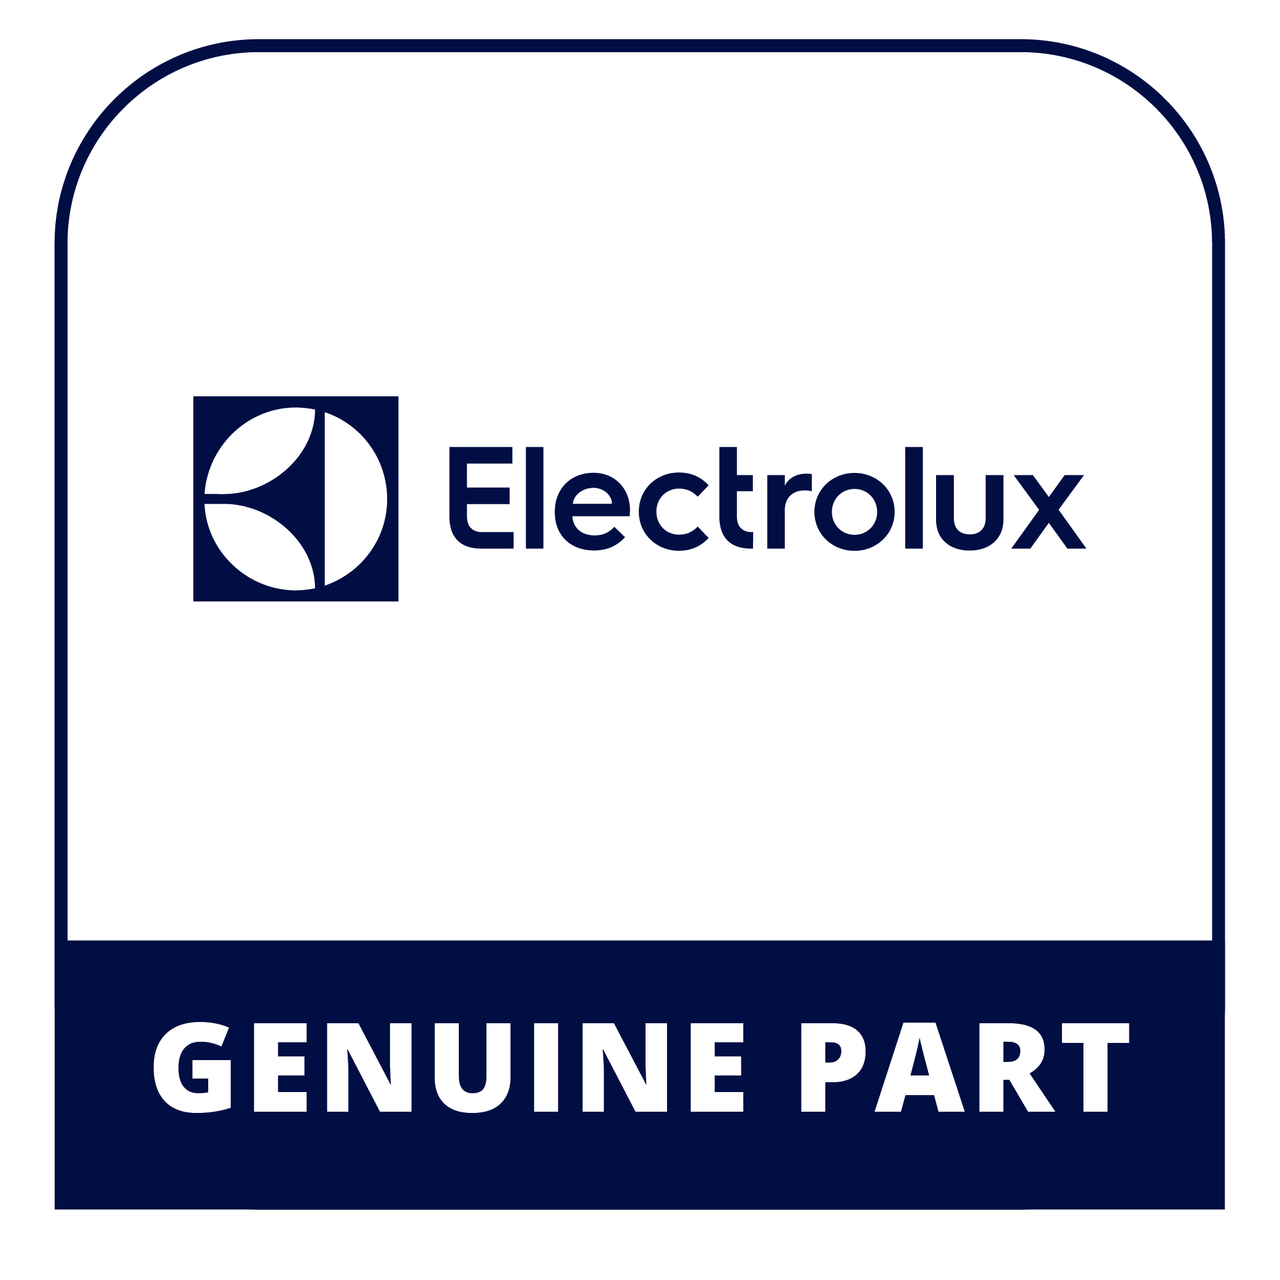 Frigidaire - Electrolux 5304496050 - L&R Hinge Stop Repl - Genuine Electrolux Part